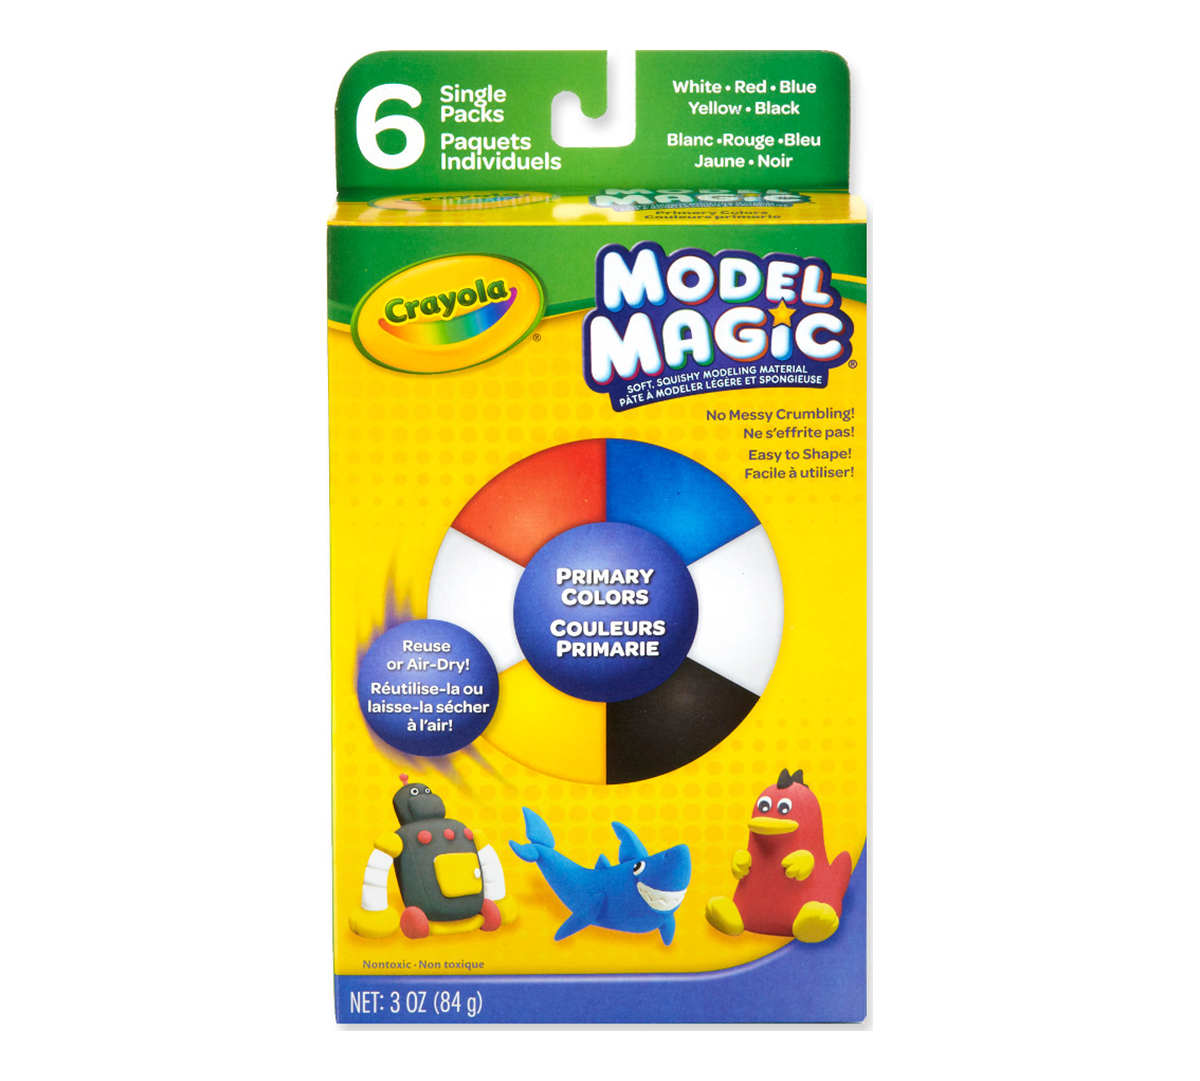 crayola model magic gooey fun